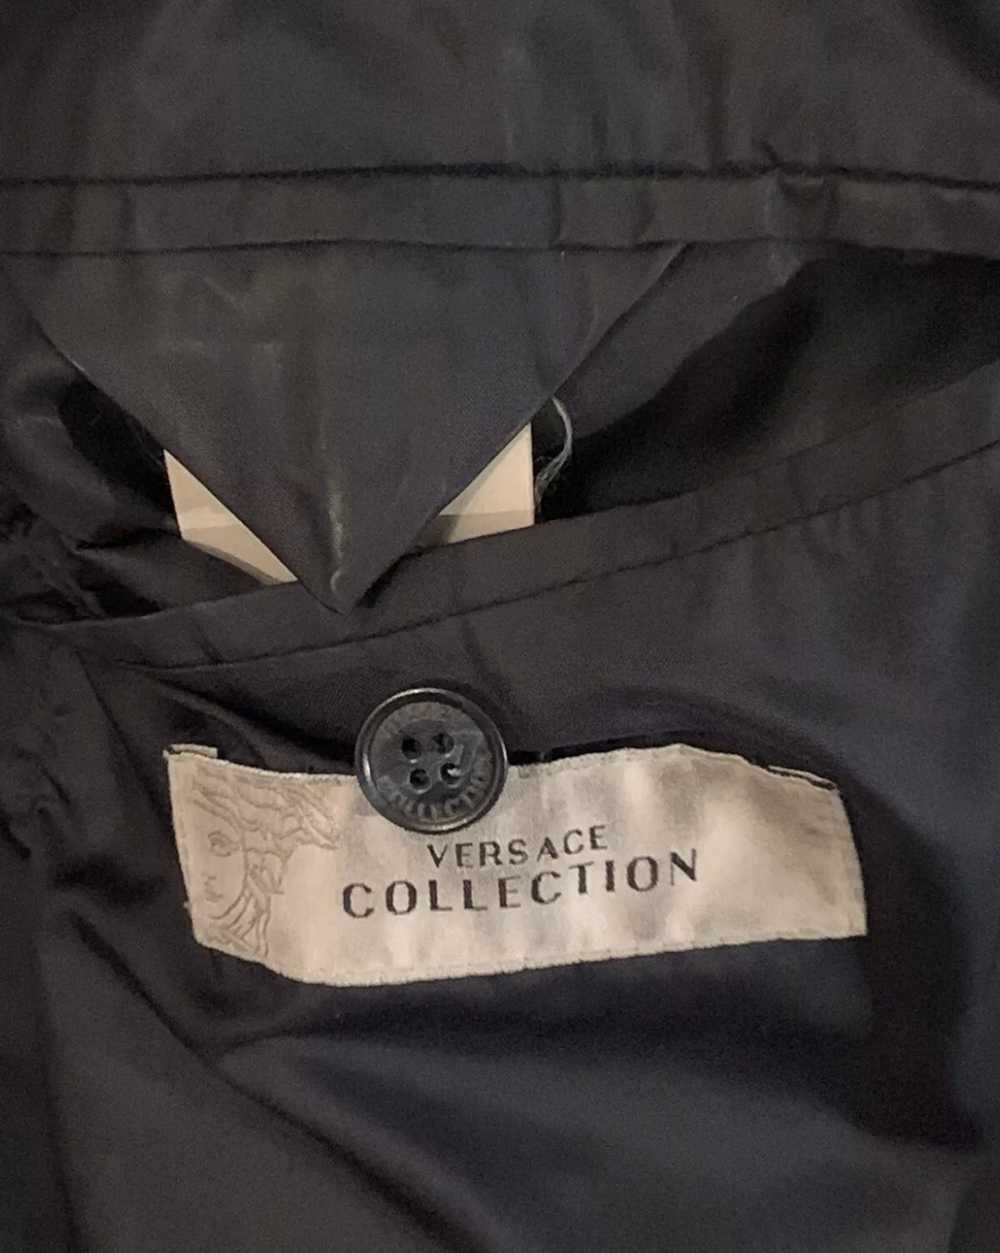 Versace Versace Collection Black Jacket - image 4